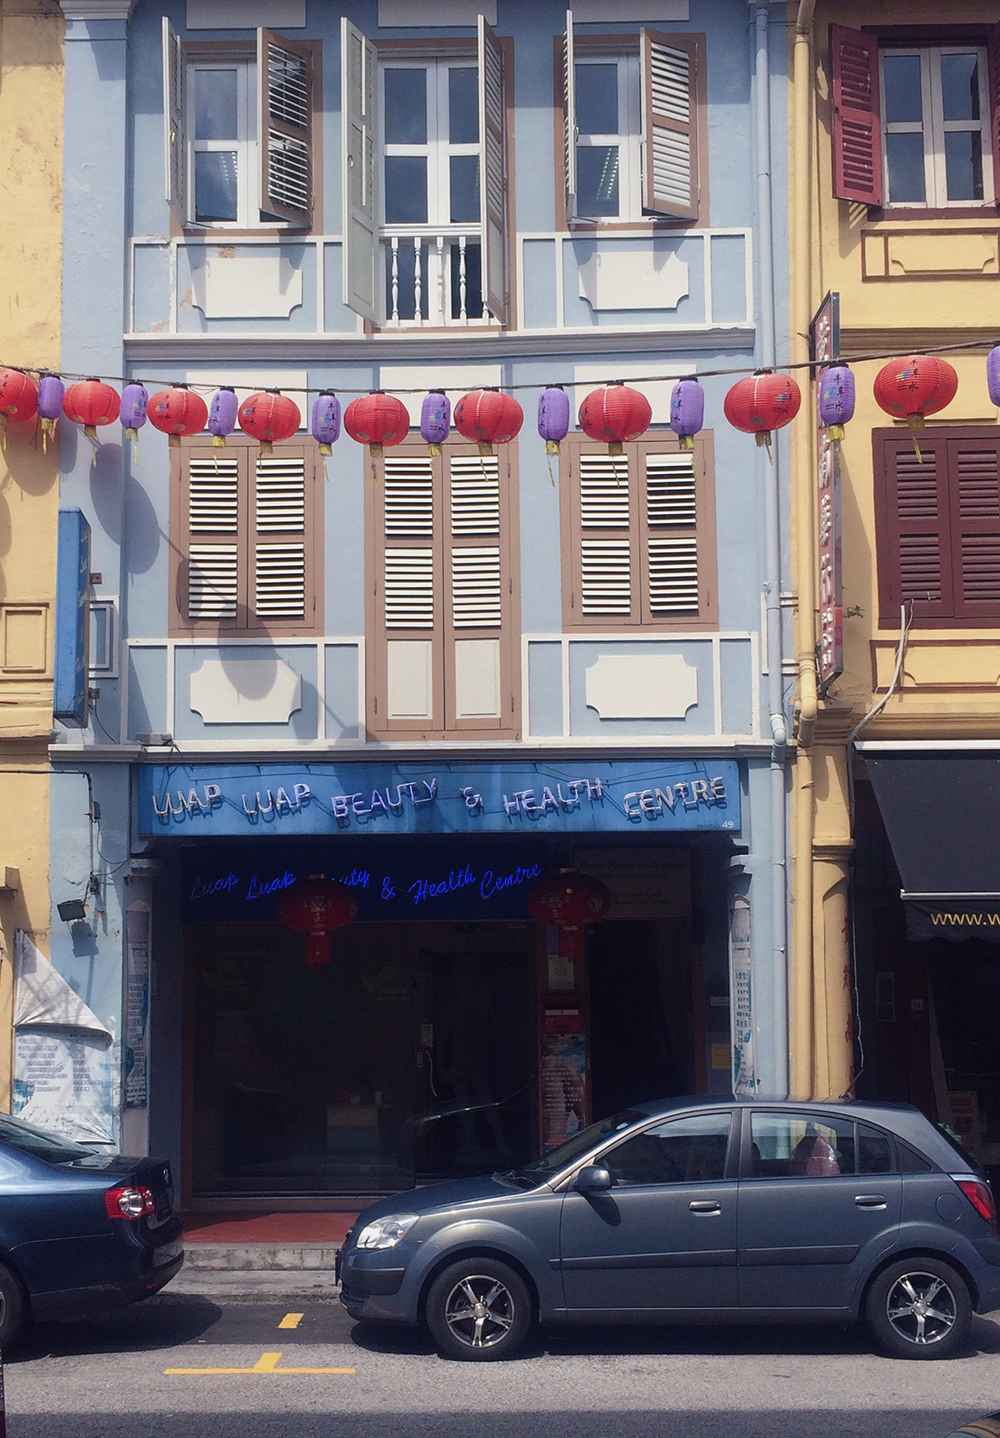 Chinatown singapore guide